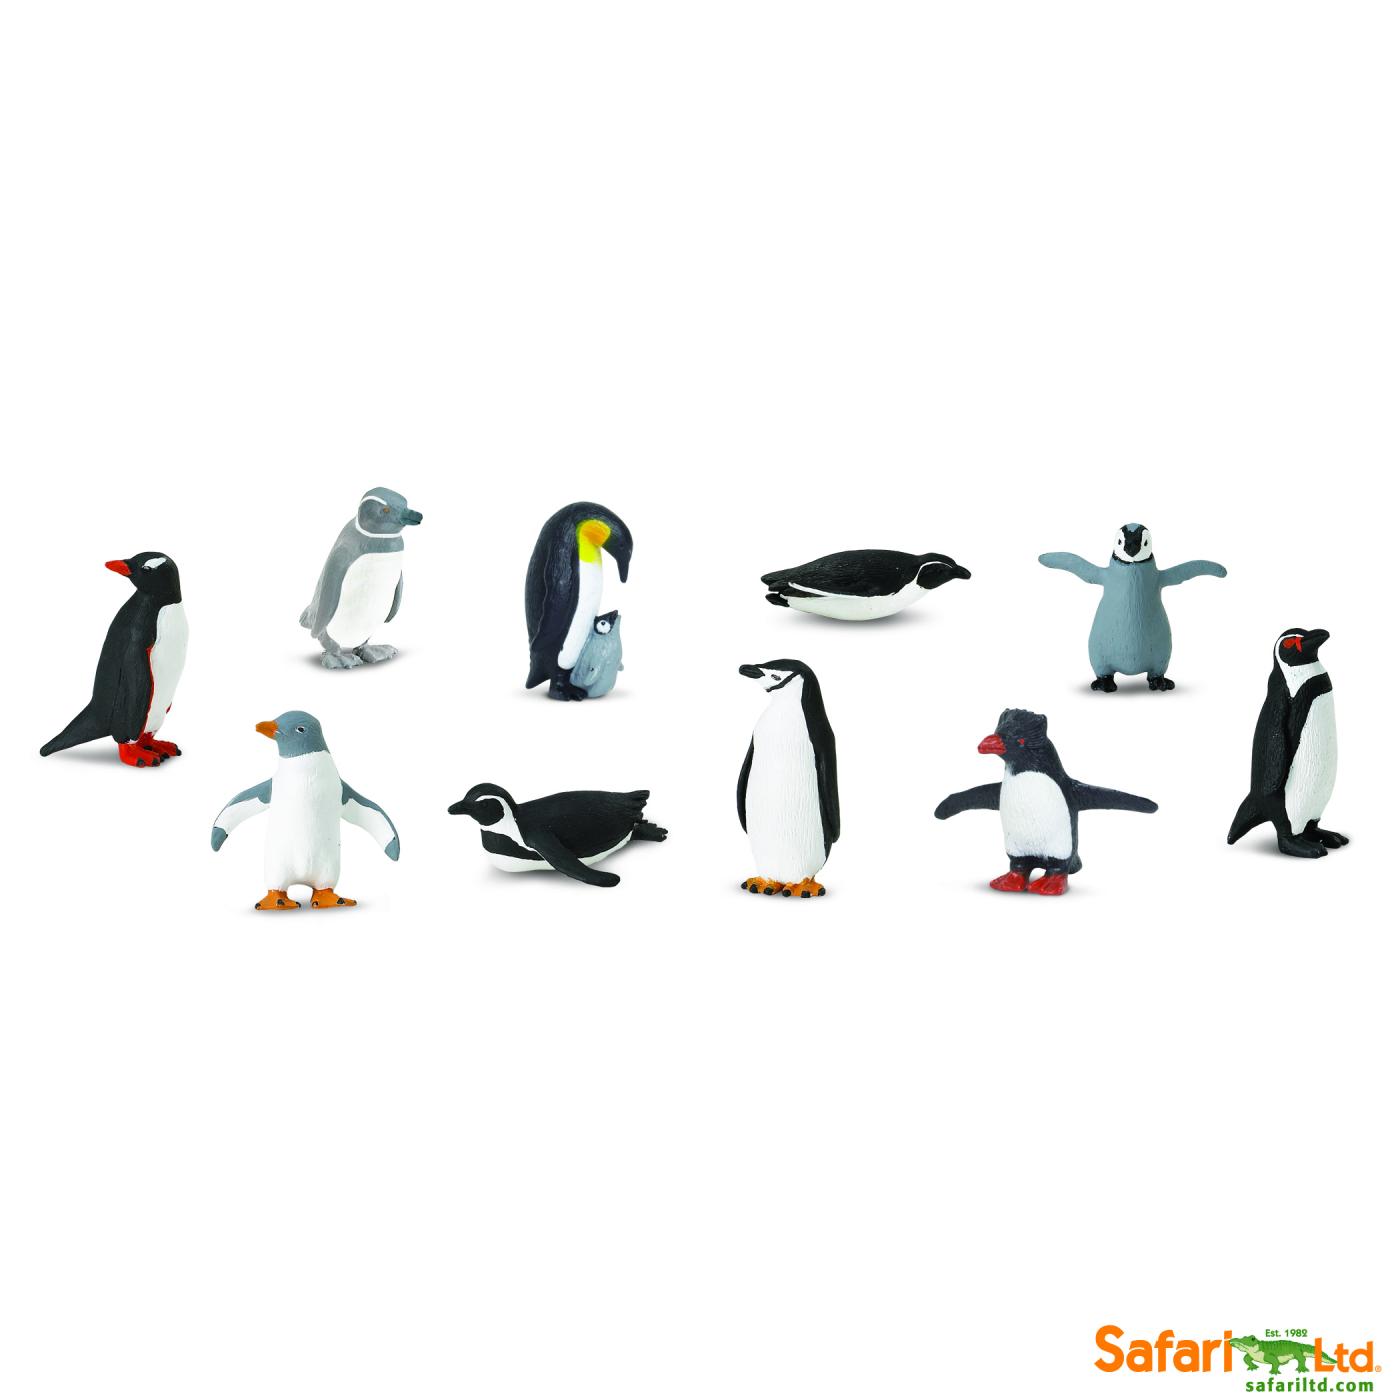 Safari Ltd Toob Pinguine Spiel Sammel Figuren Themengebiet Antarktis 